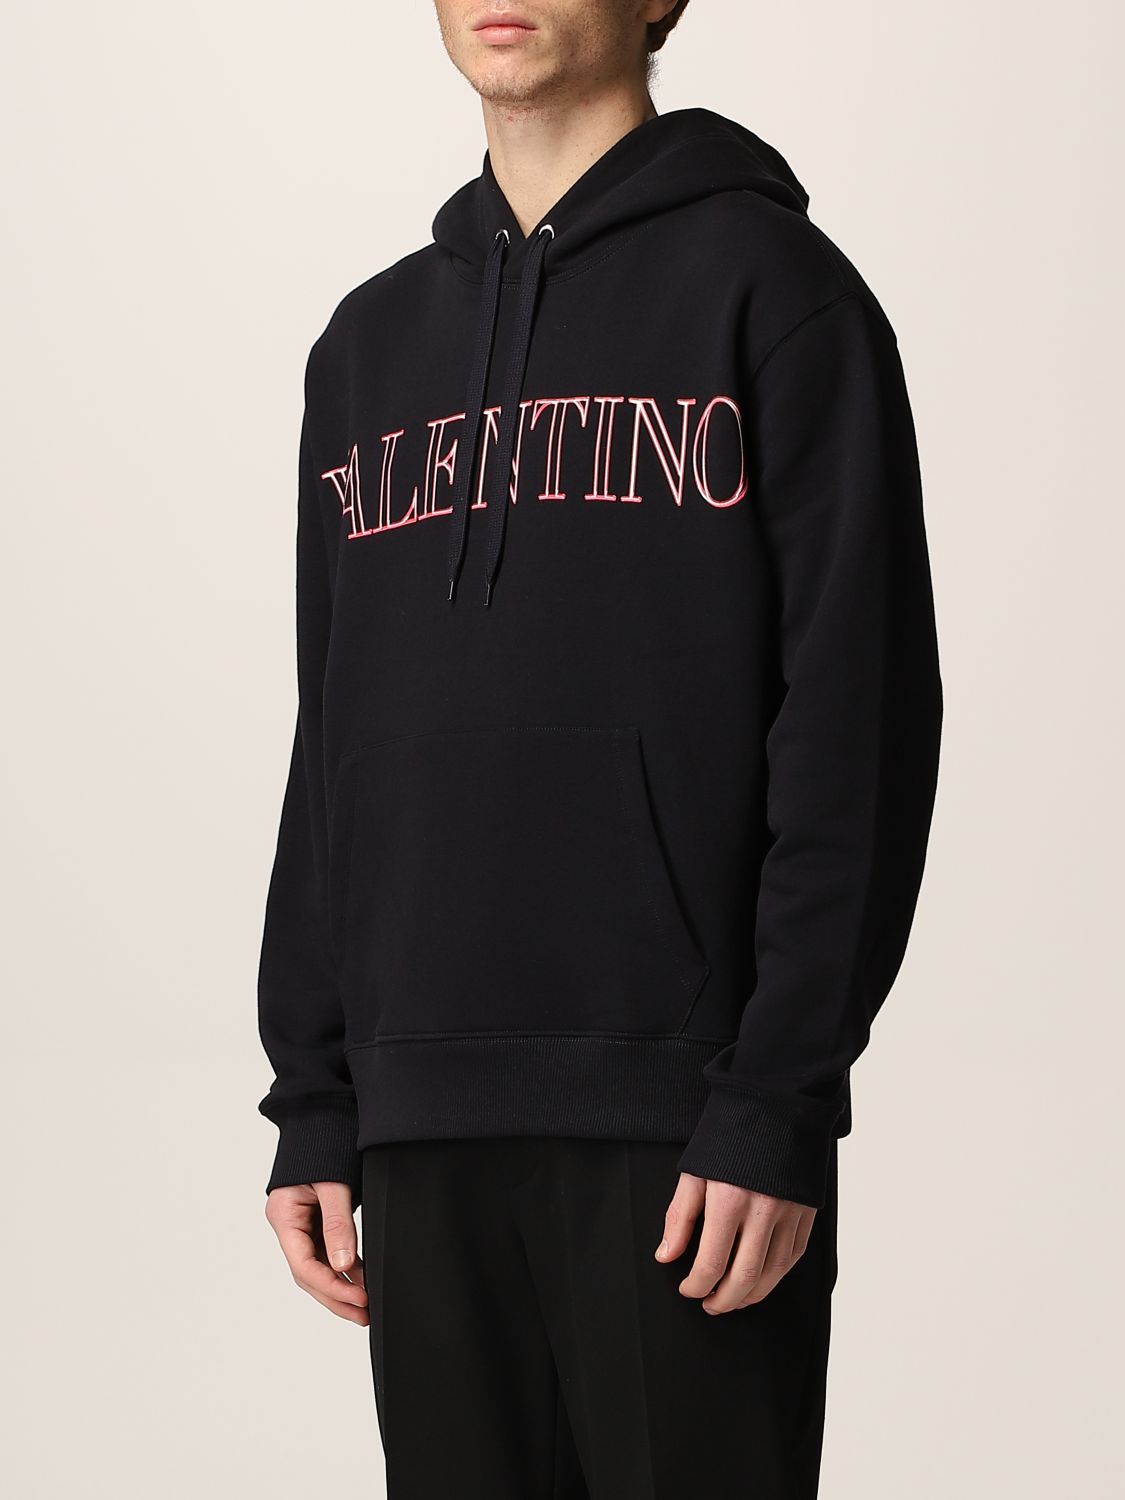 VALENTINO: Neon Universe hoodie with logo - Navy | Valentino sweatshirt ...